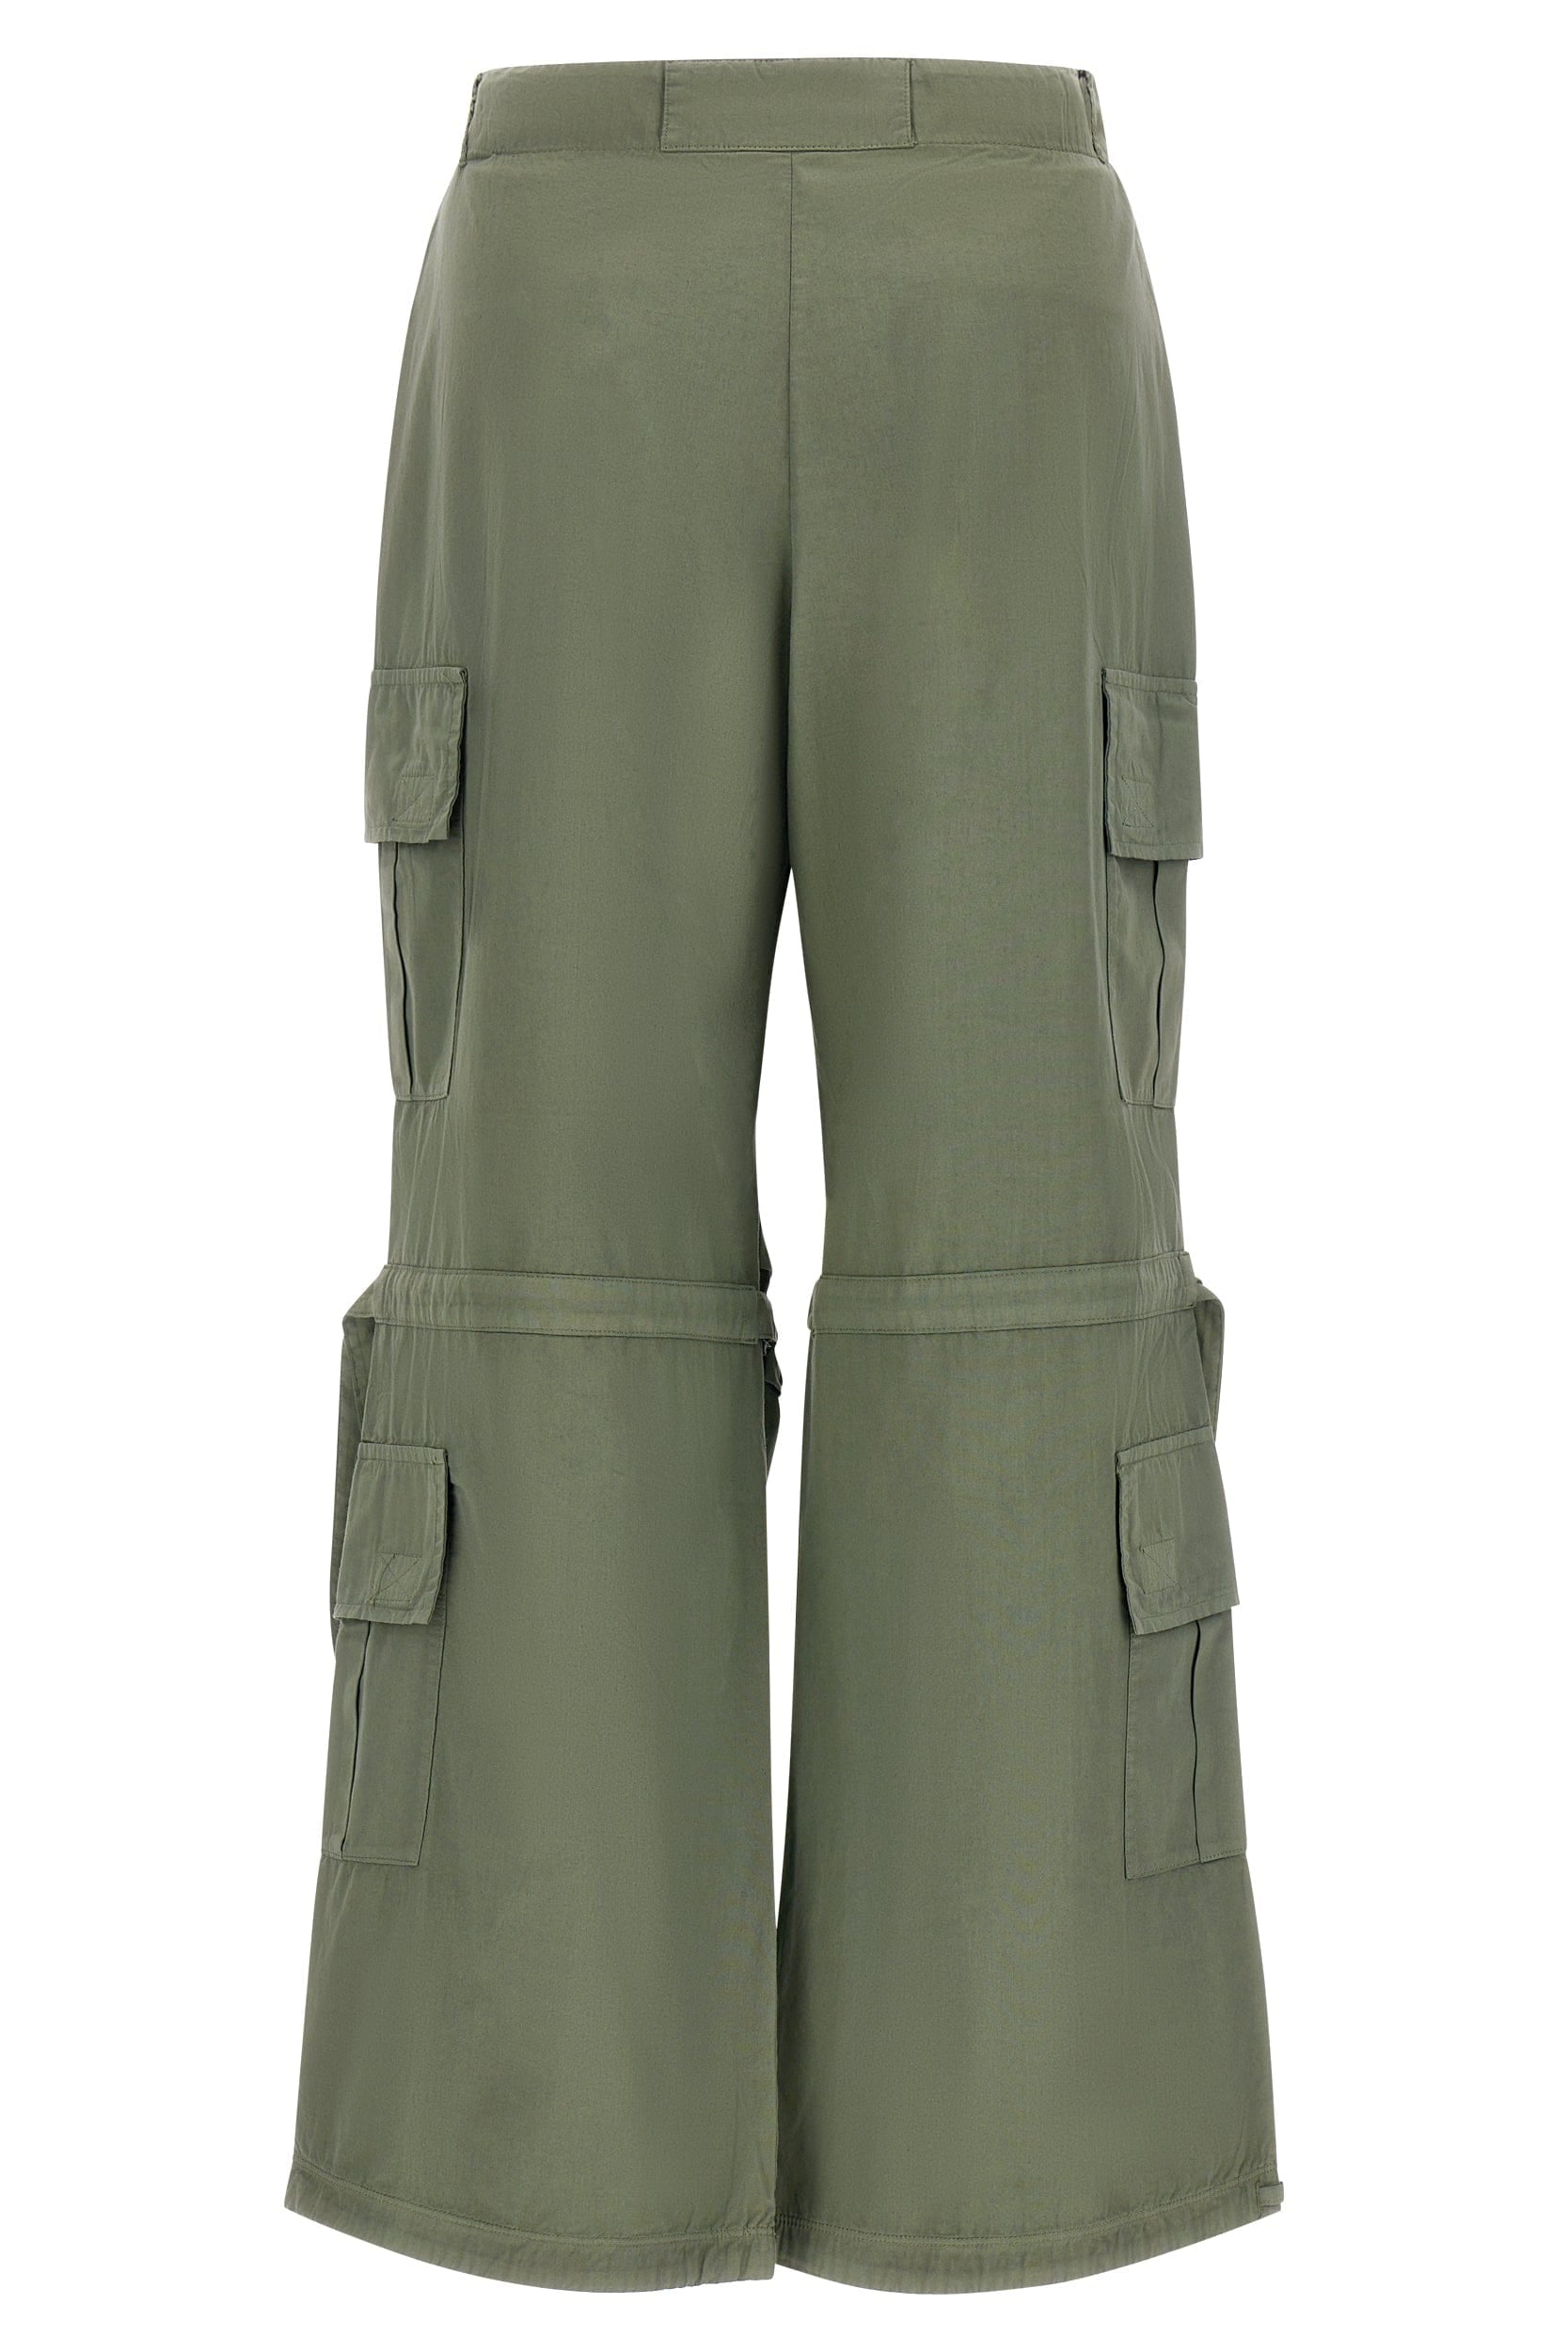 Pantalones cargo - Talle alto - Largo completo - Verde militar 8